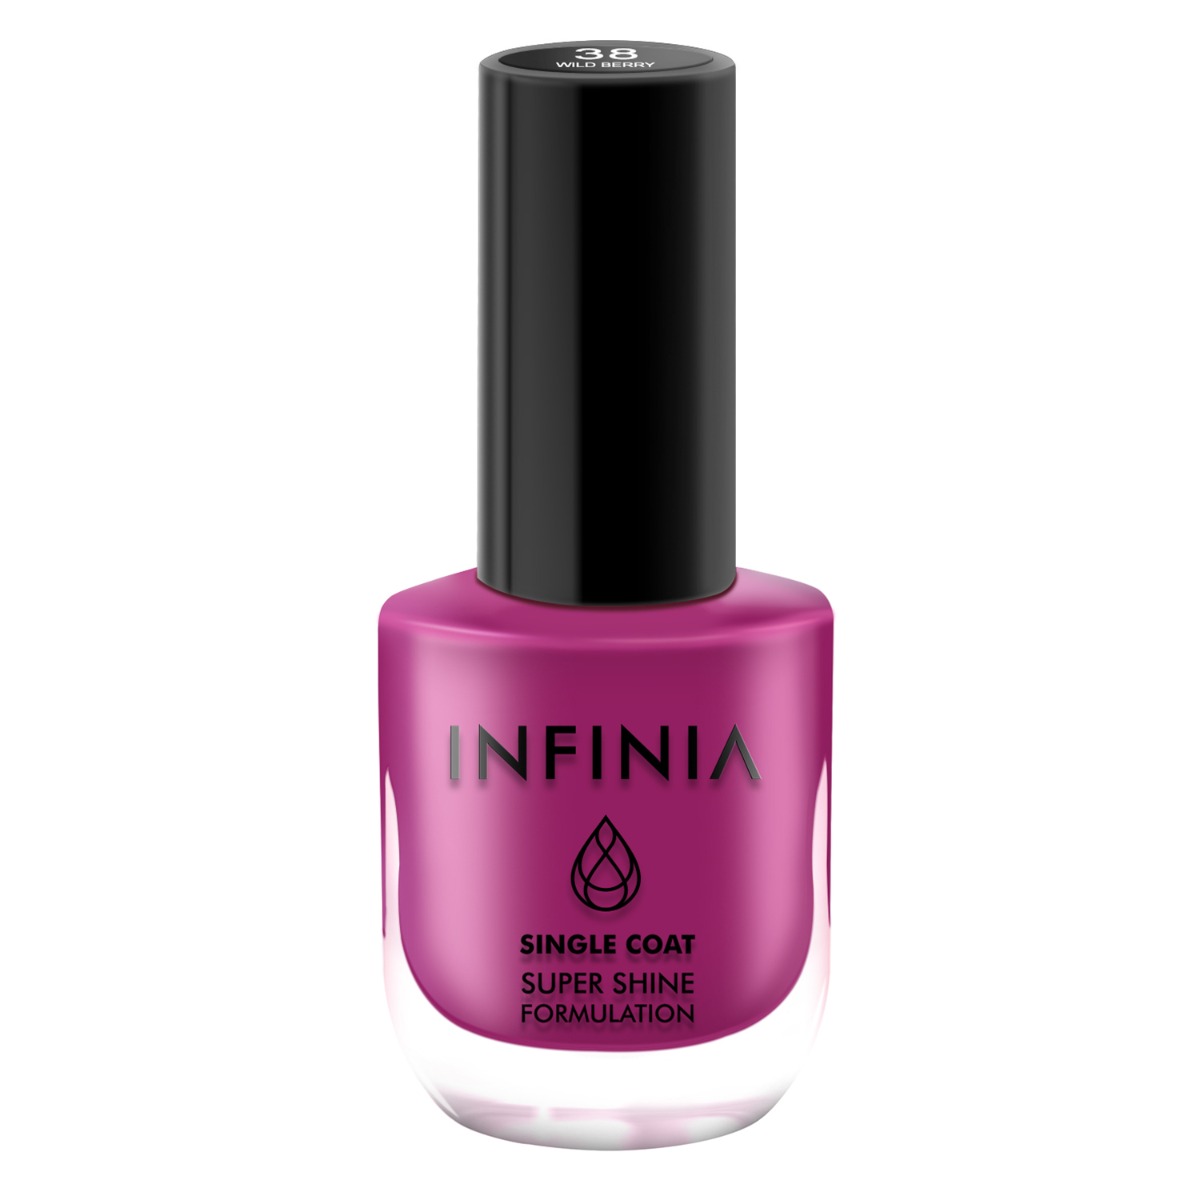 INFINIA Single Coat Super Shine Nail Polish With Ultra High Gloss, 12ml-038 Wild Berry